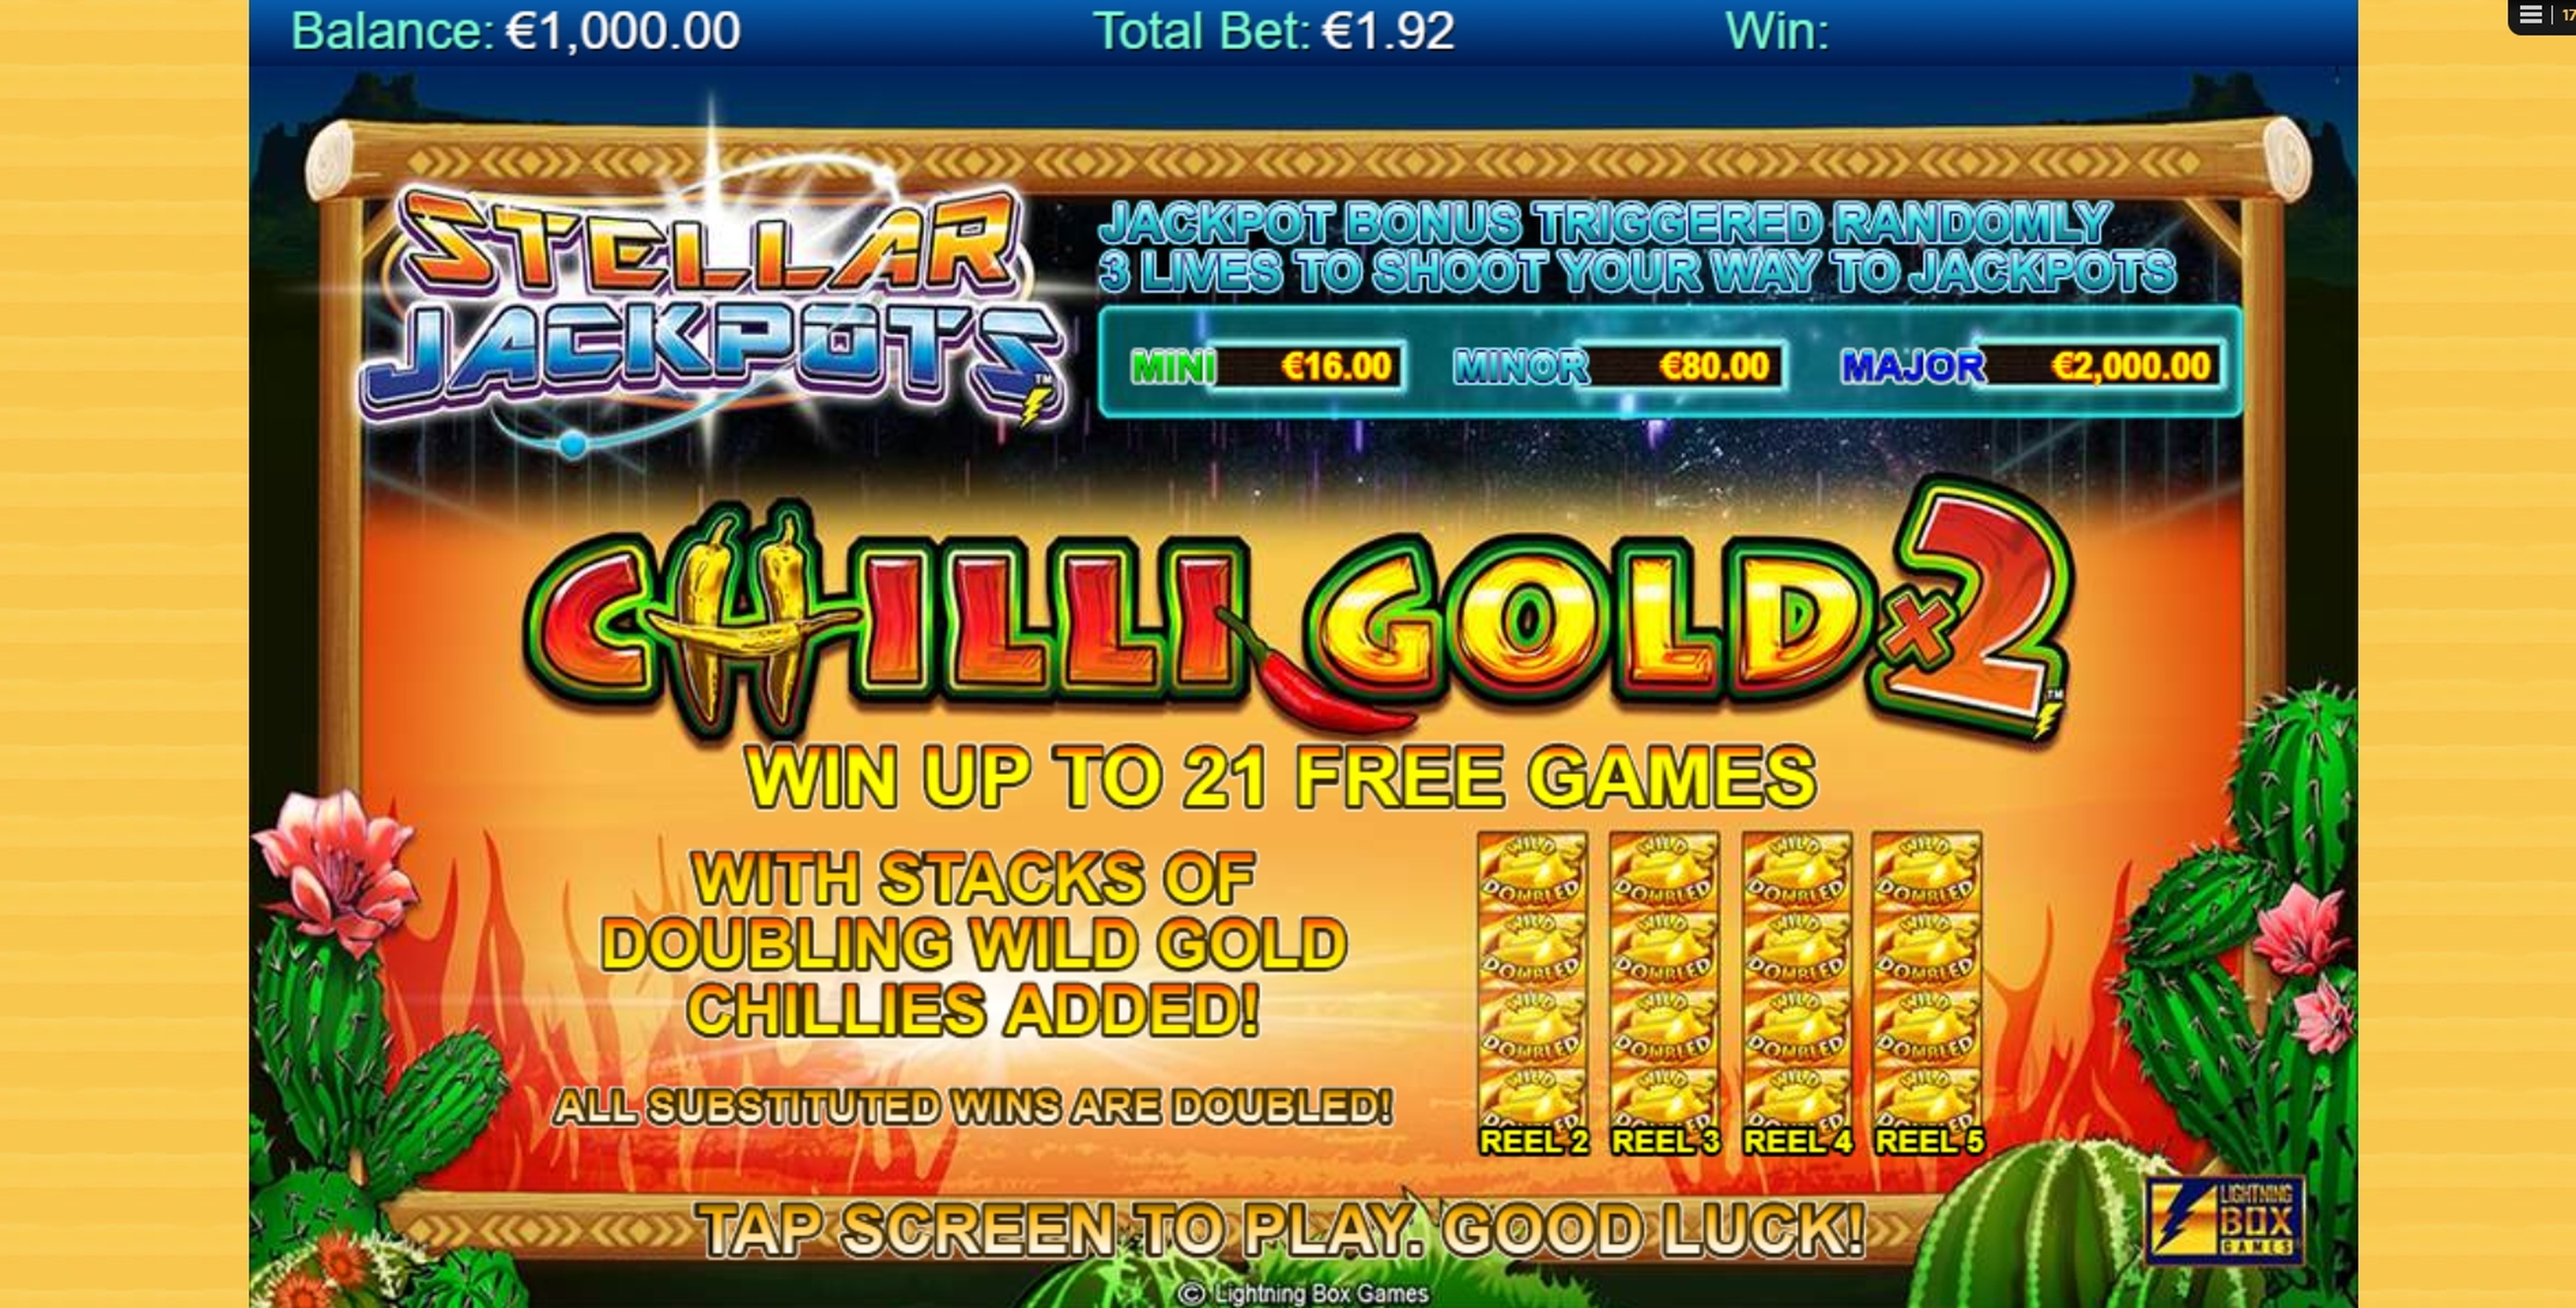 Play Stellar Jackpots with Chilli Gold x2 Free Casino Slot Game by Lightning Box